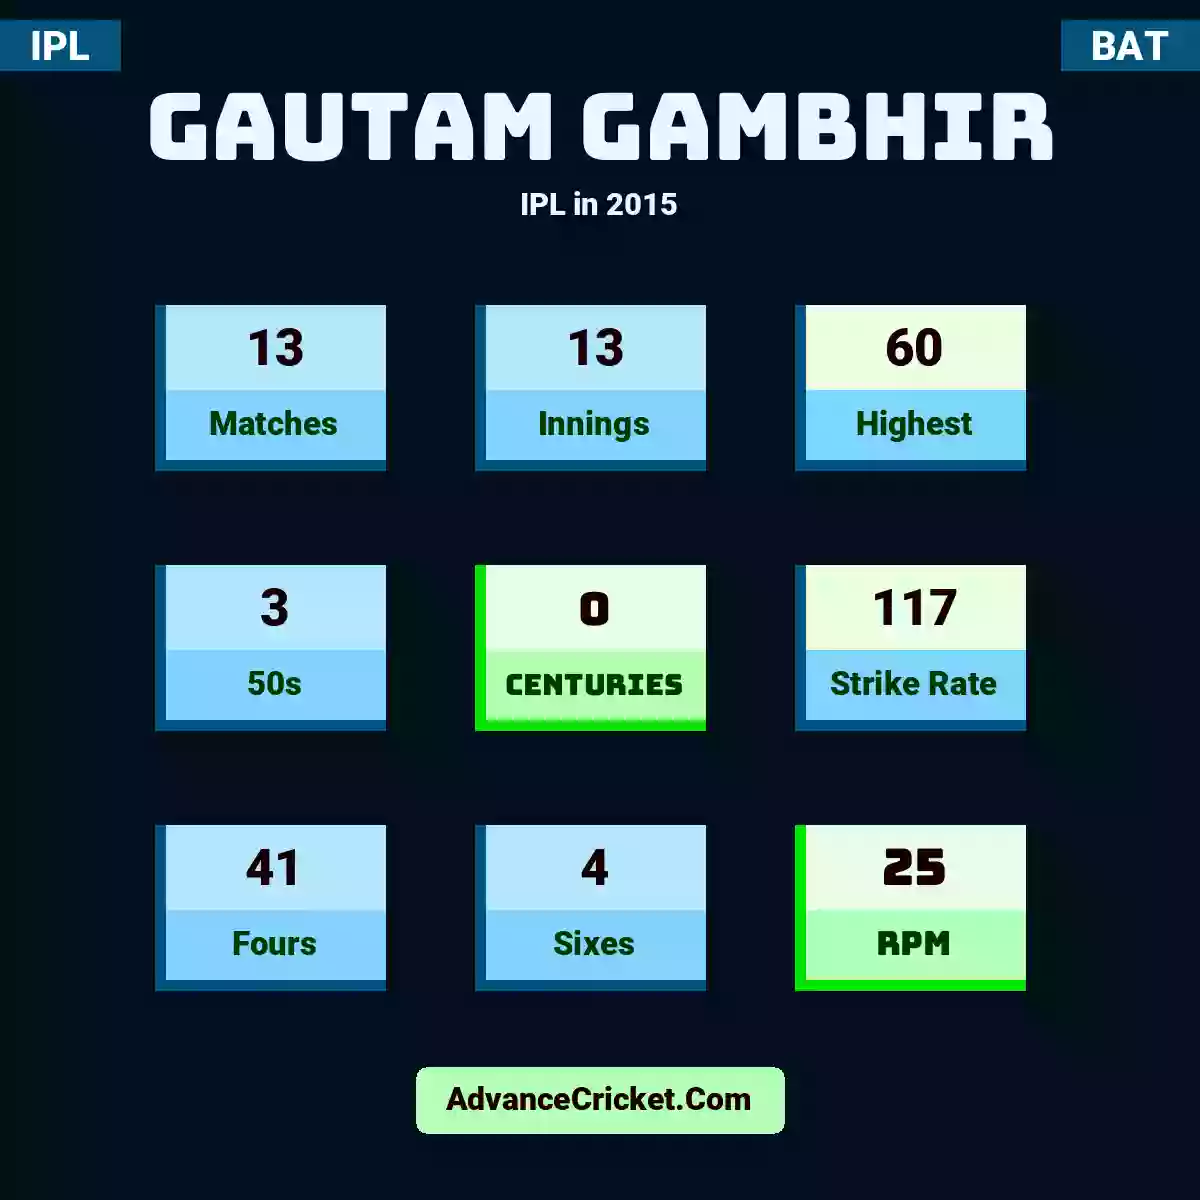 Gautam Gambhir IPL  in 2015, Gautam Gambhir played 13 matches, scored 60 runs as highest, 3 half-centuries, and 0 centuries, with a strike rate of 117. G.Gambhir hit 41 fours and 4 sixes, with an RPM of 25.